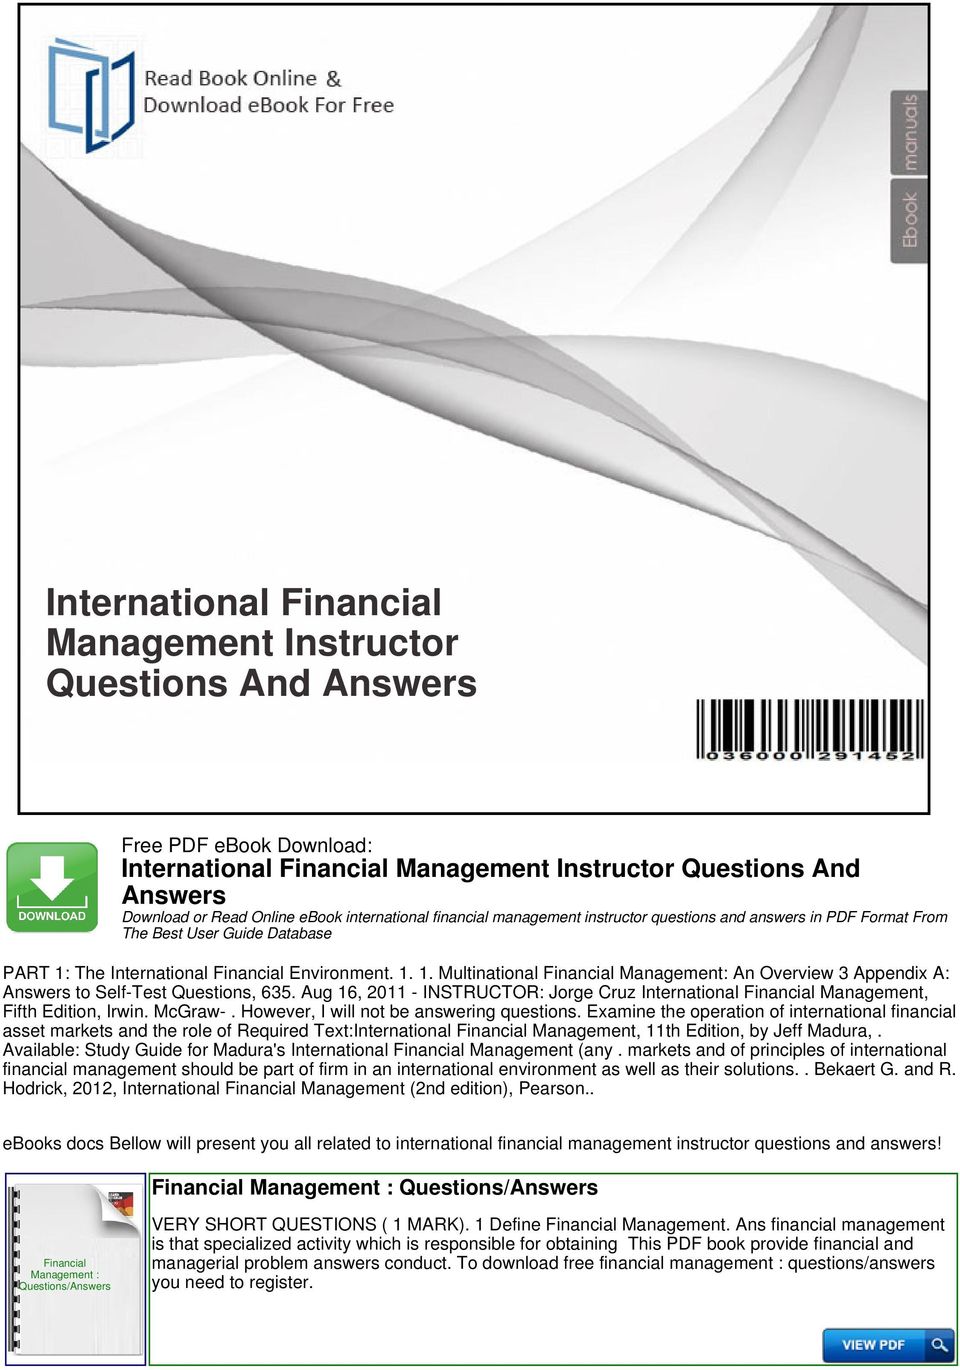 Financial management questions essay